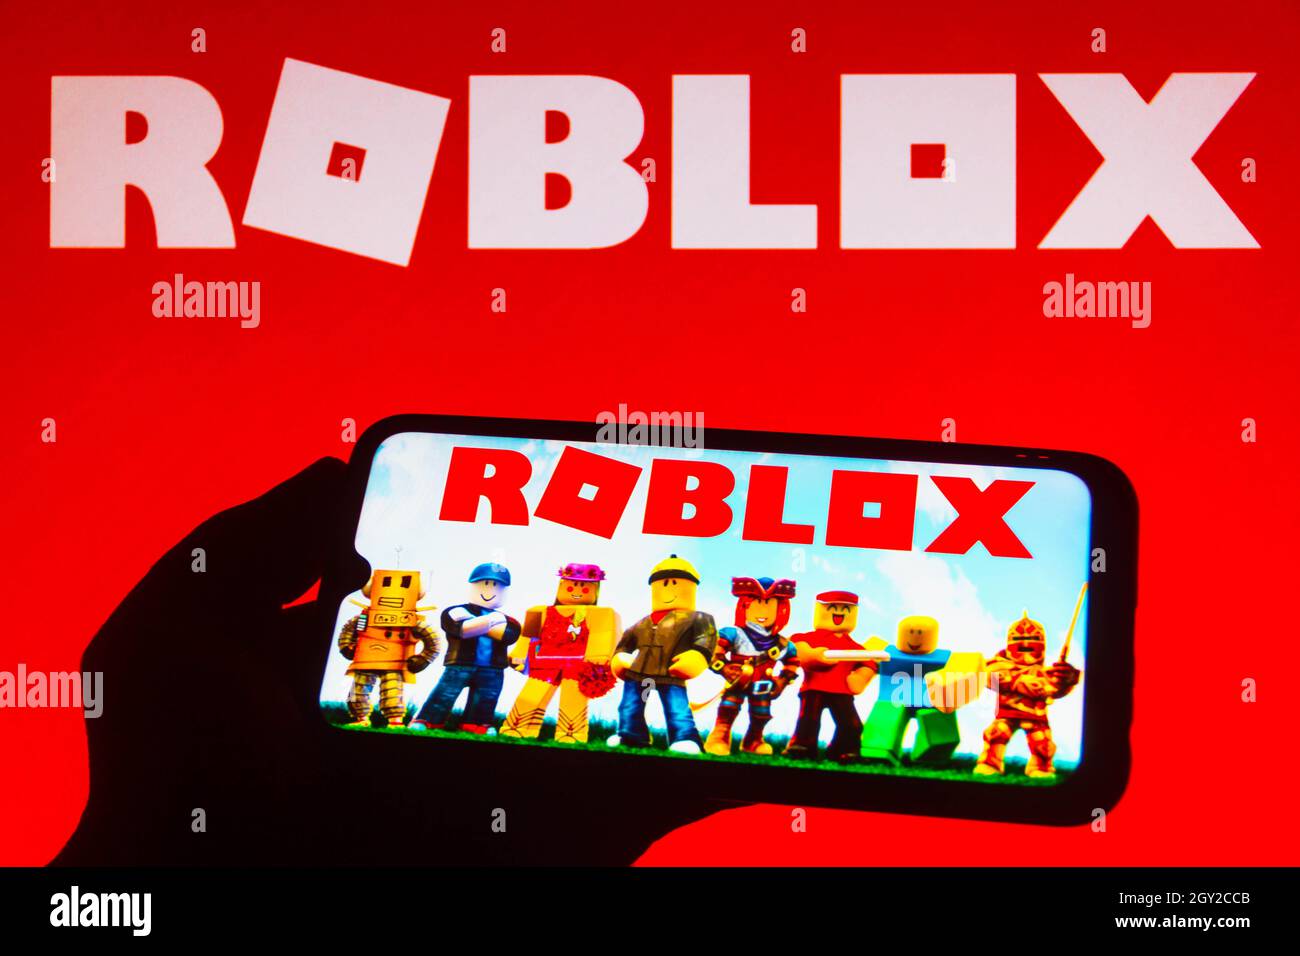 Pixilart - Roblox Logo 2020 2021 by Alpxl